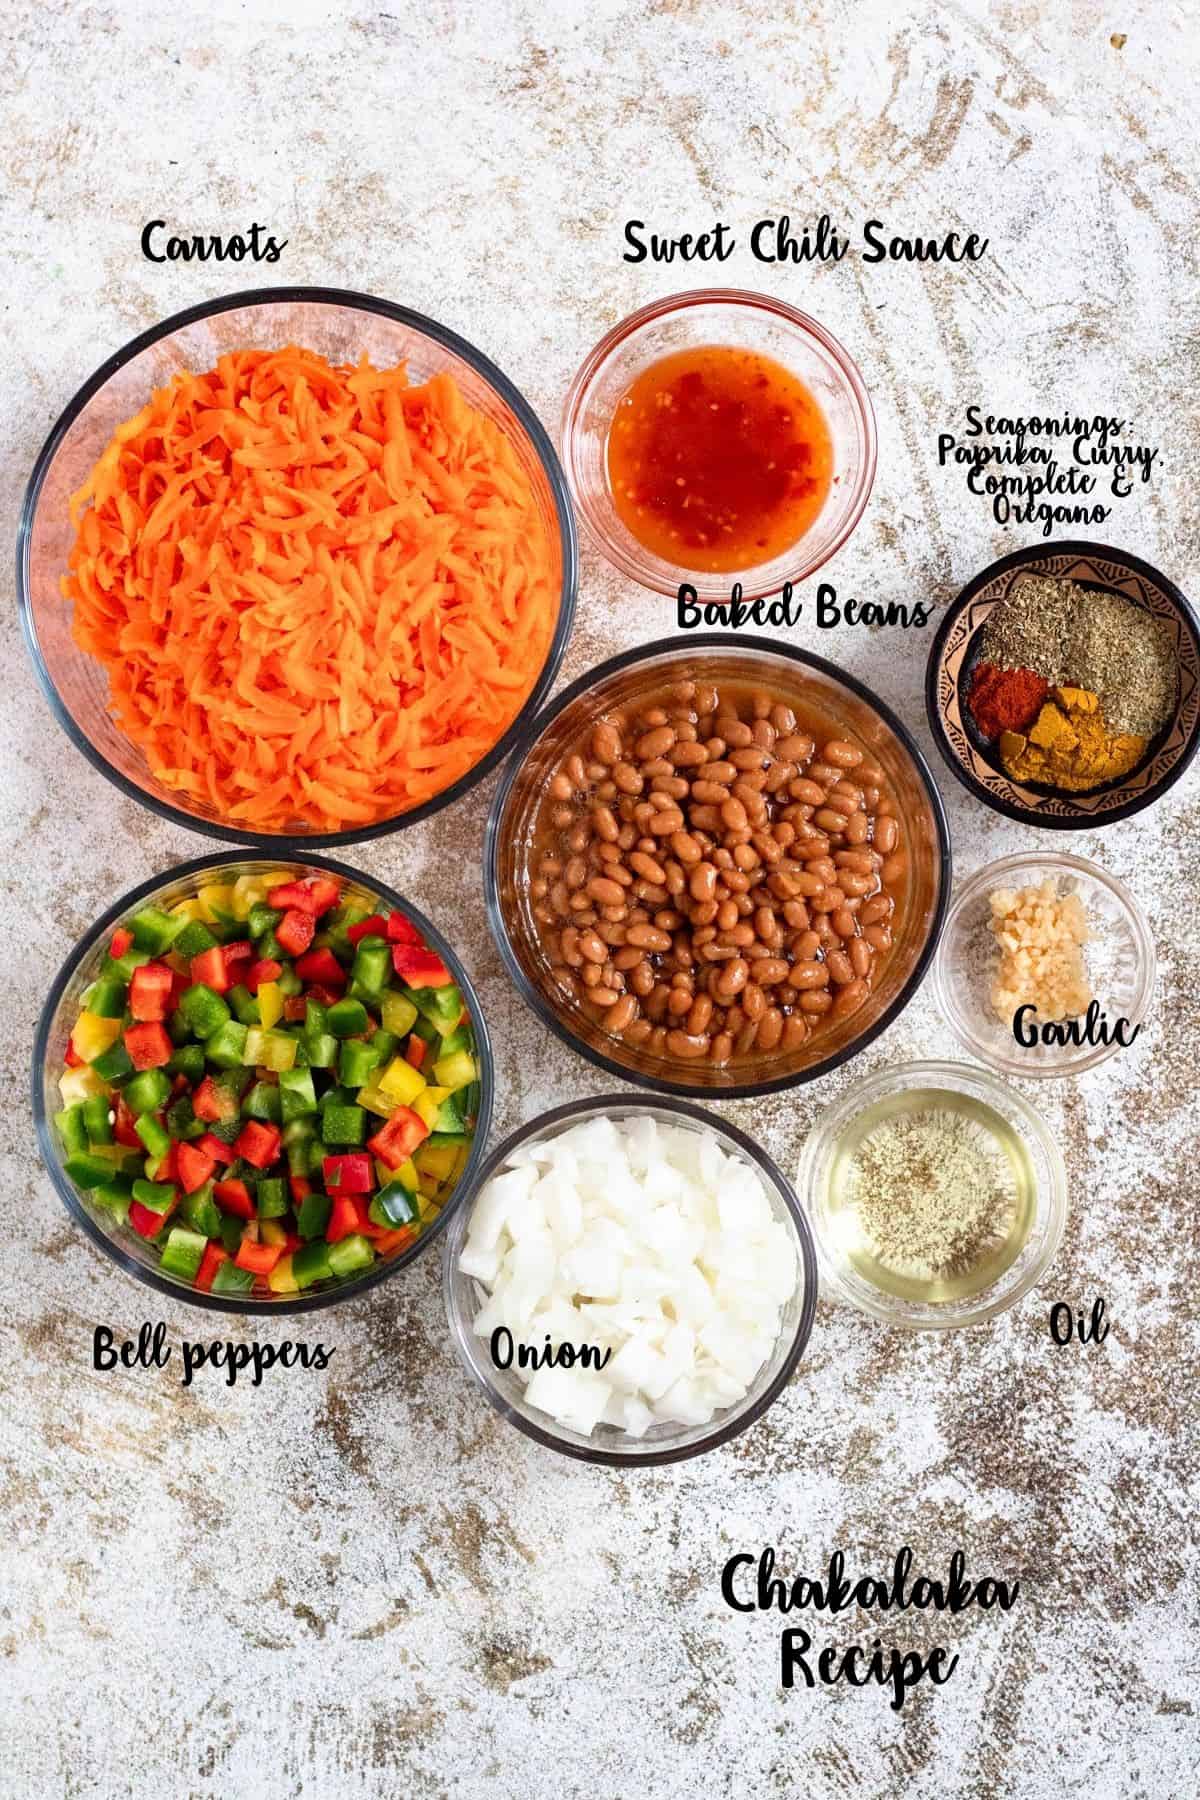 Ingredients shown are used to prepare chakalaka recipe. 